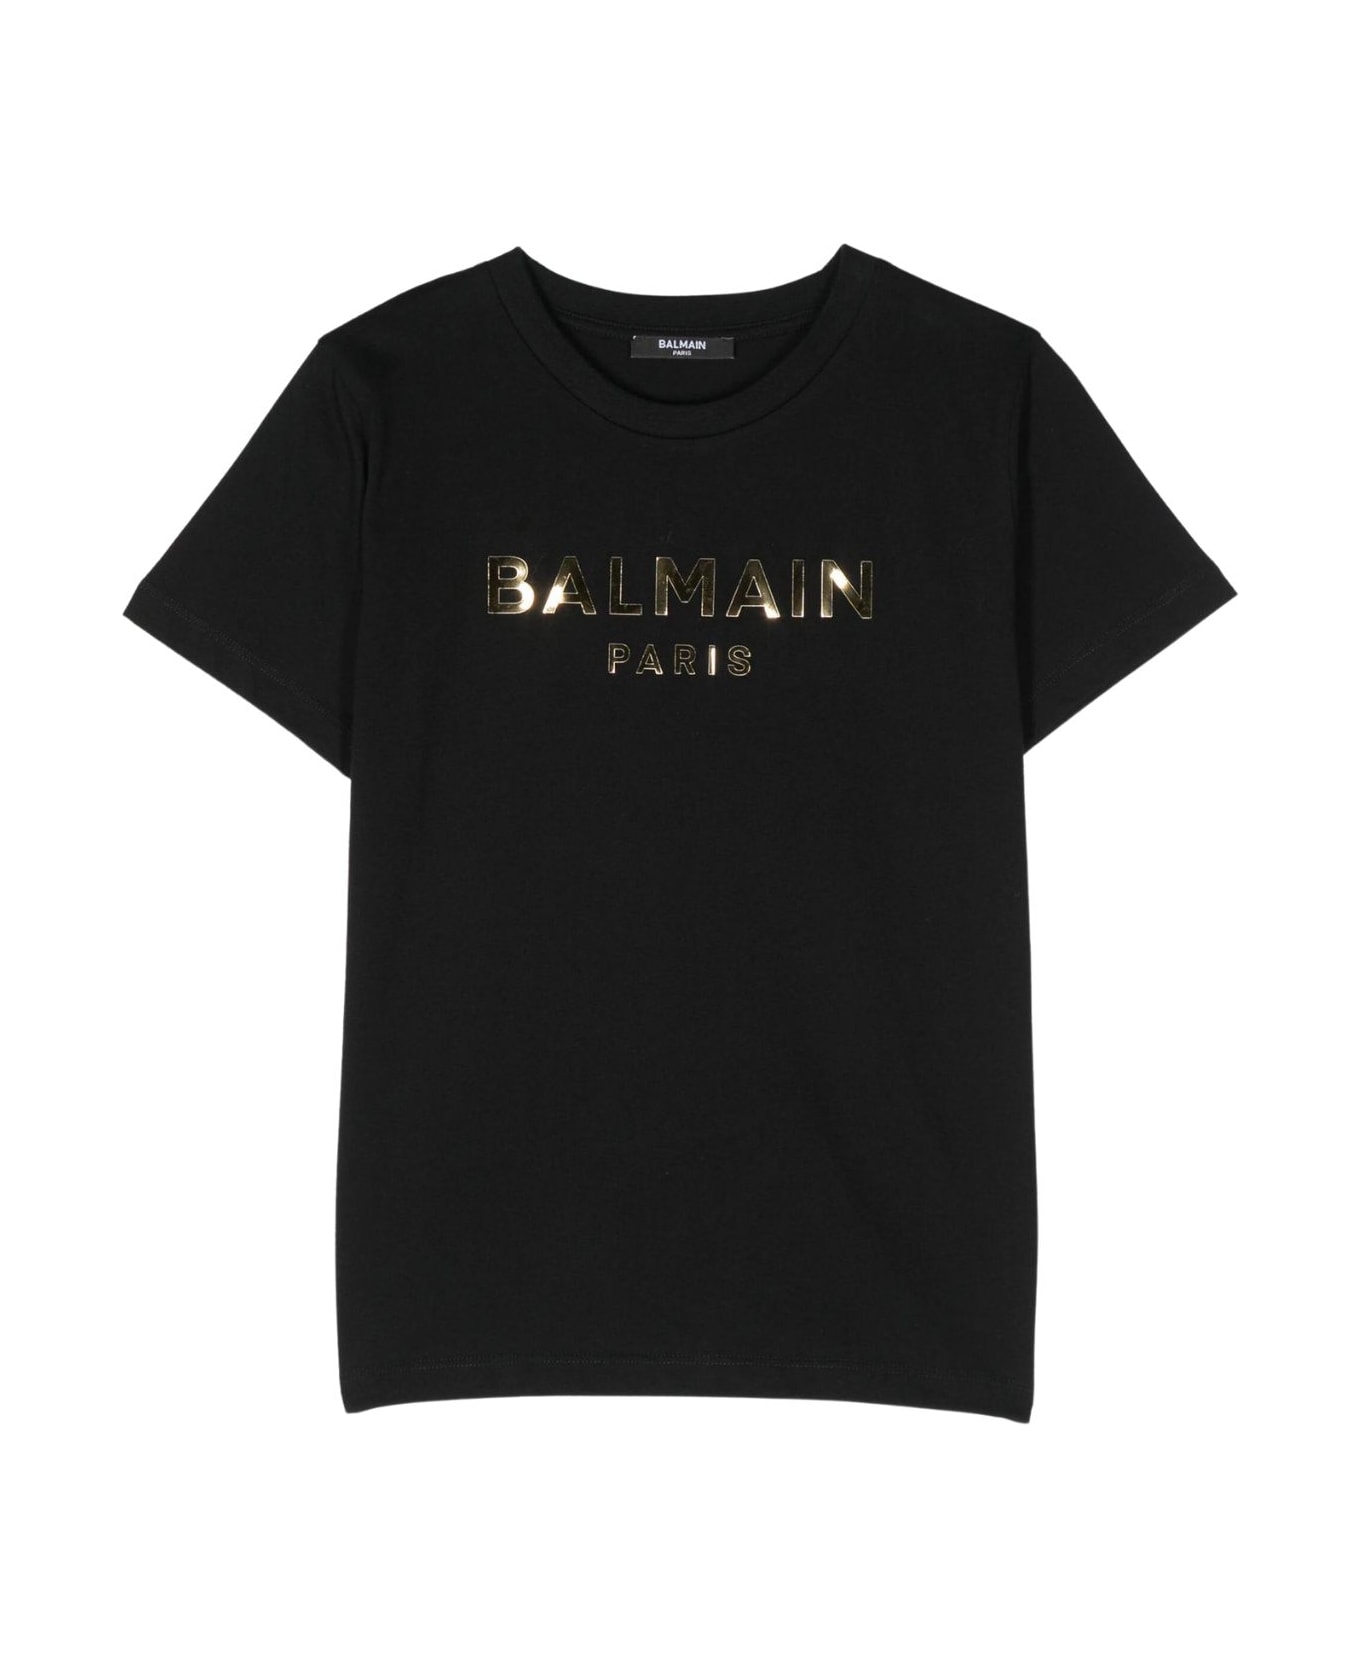 Balmain T Shirt - Or Black Gold